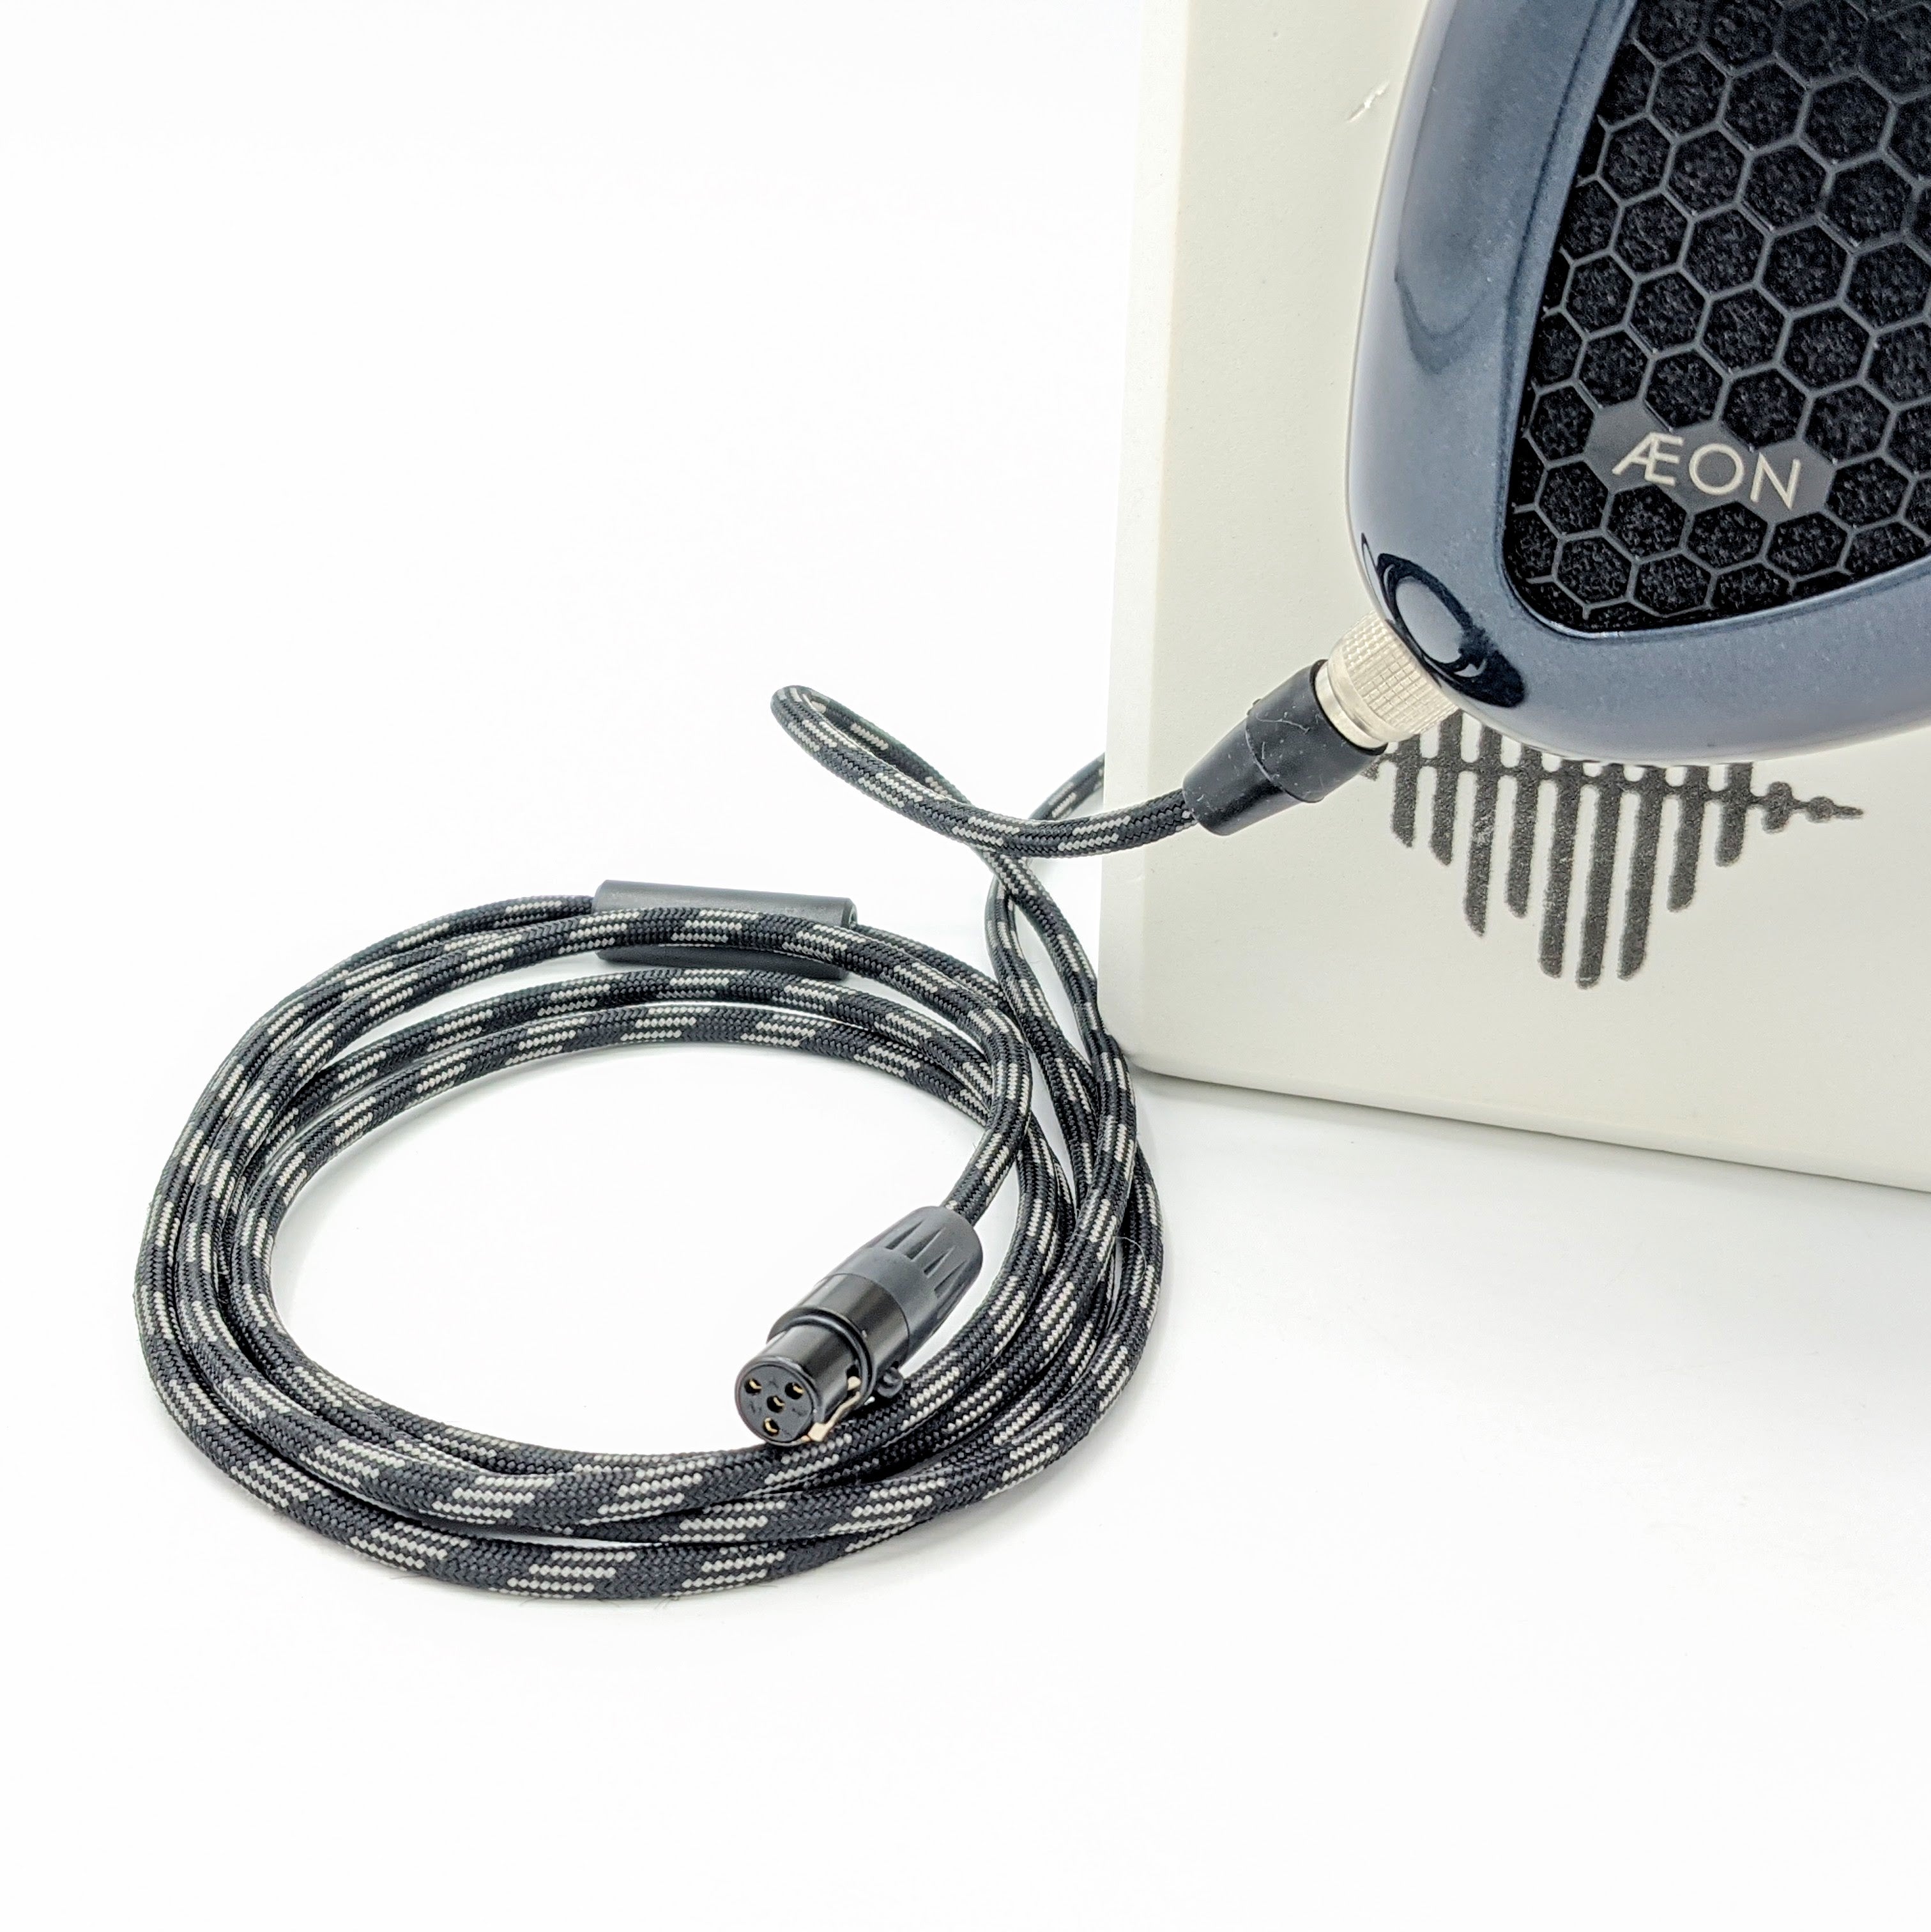 HC-12: Dual Push-Pull (Mr. Speakers) Balanced Headphone Cable